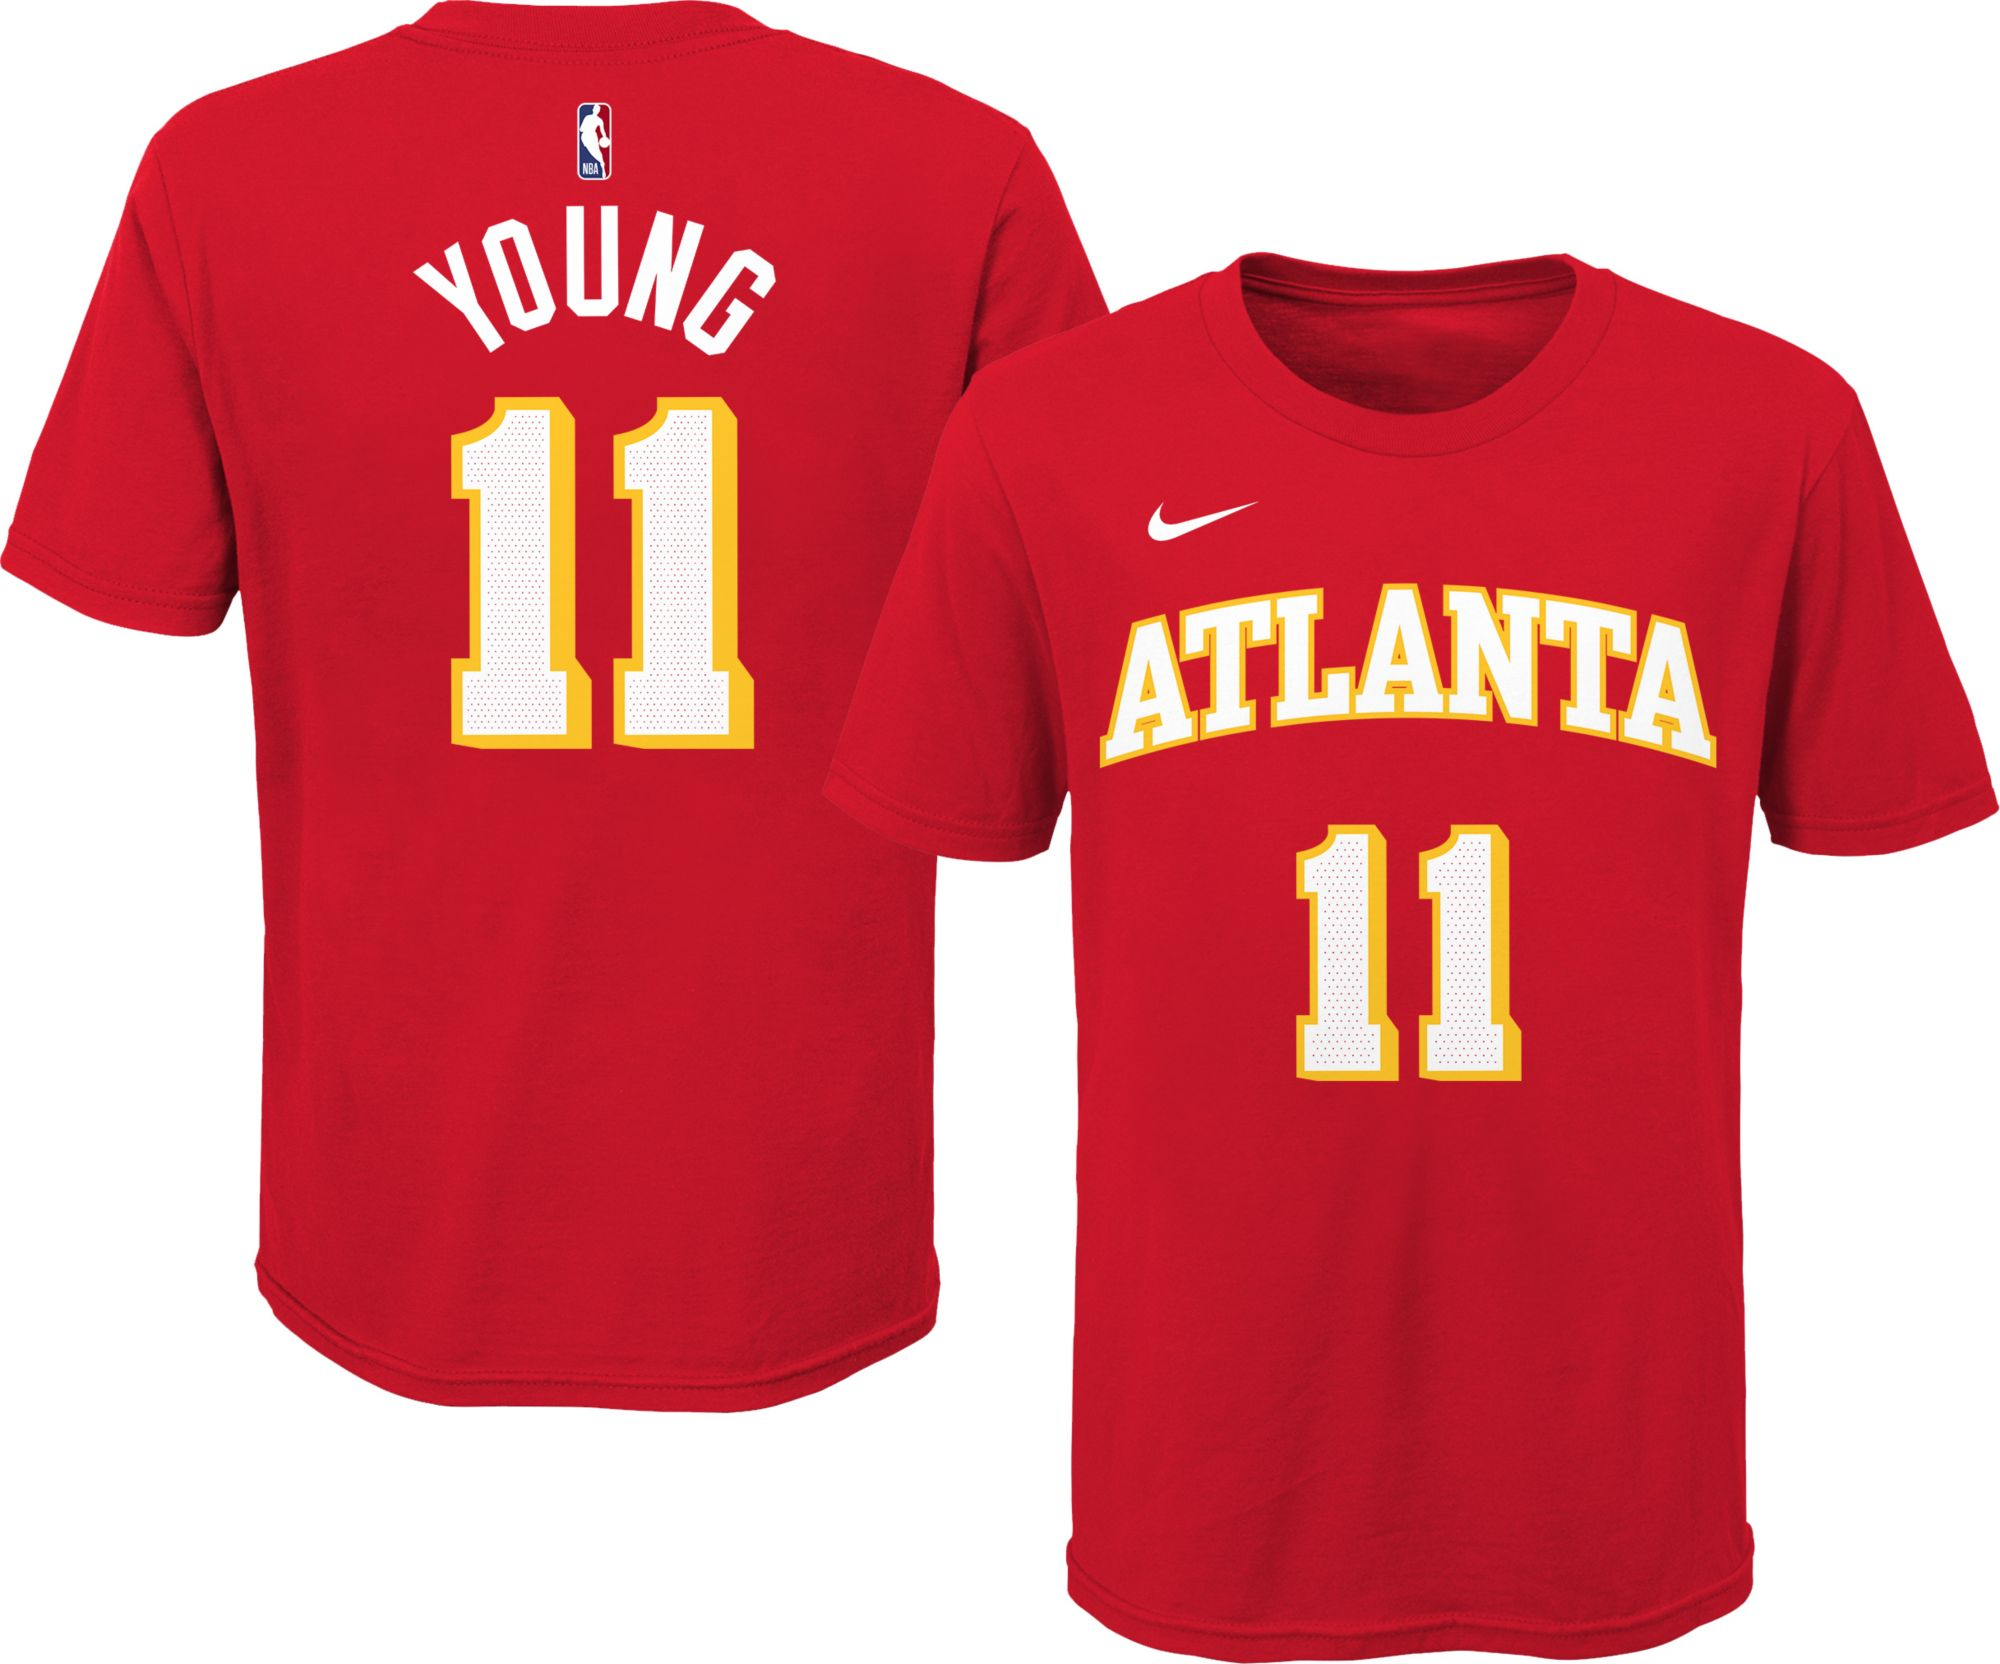 Nike Youth Atlanta Hawks Trae Young #11 Red Cotton T-Shirt, Boys', XL